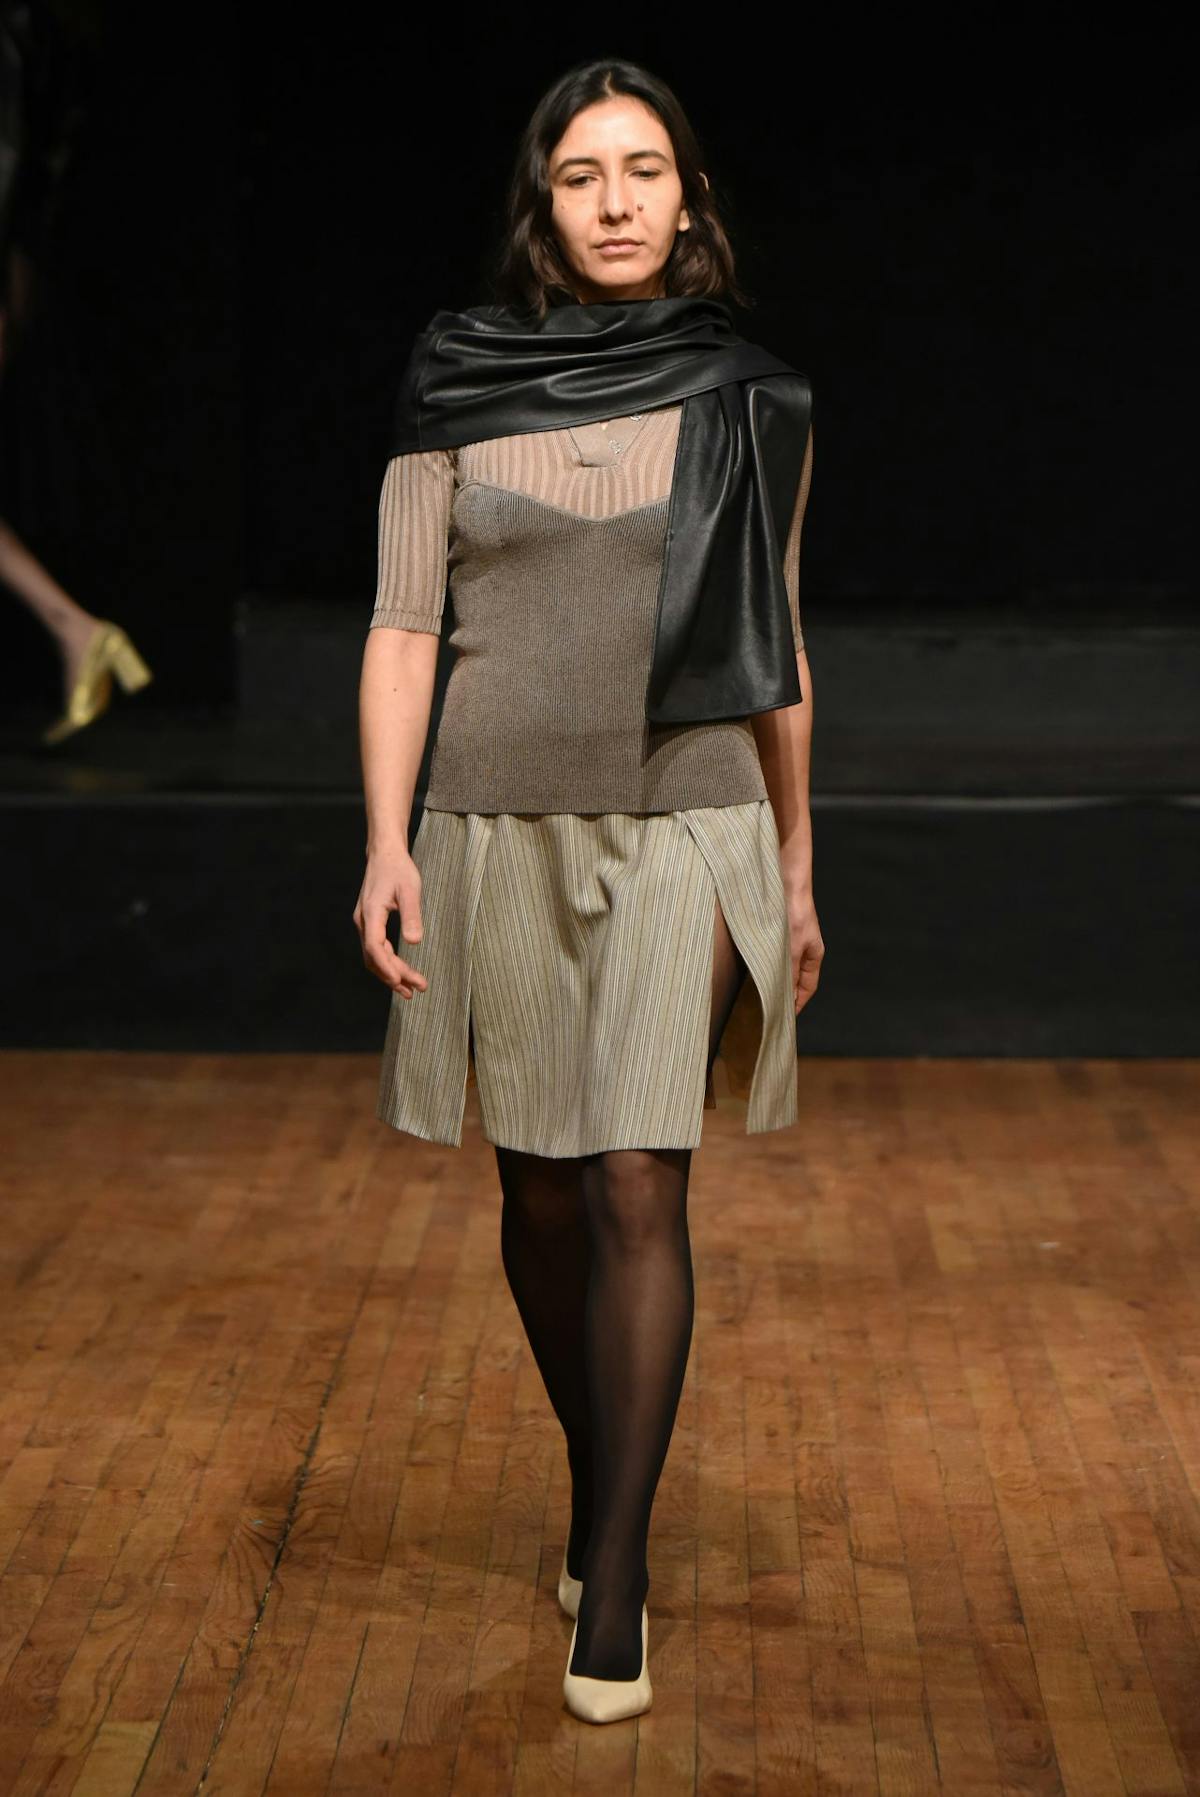 Ottessa Moshfegh makes catwalk debut at New York Fashion Week